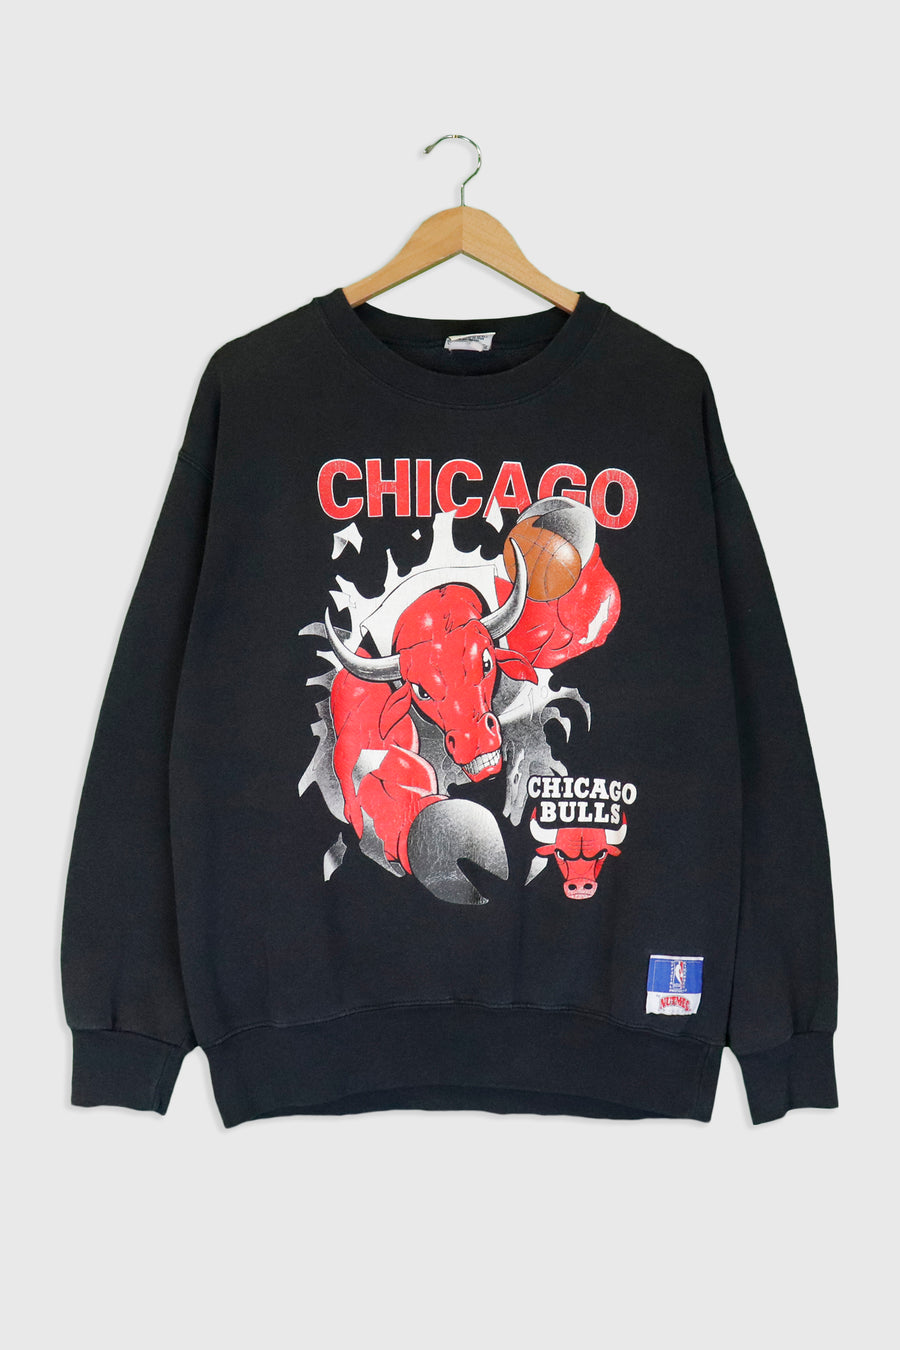 Vintage NBA Chicago Bulls Bull Face Sweatshirt Sz M